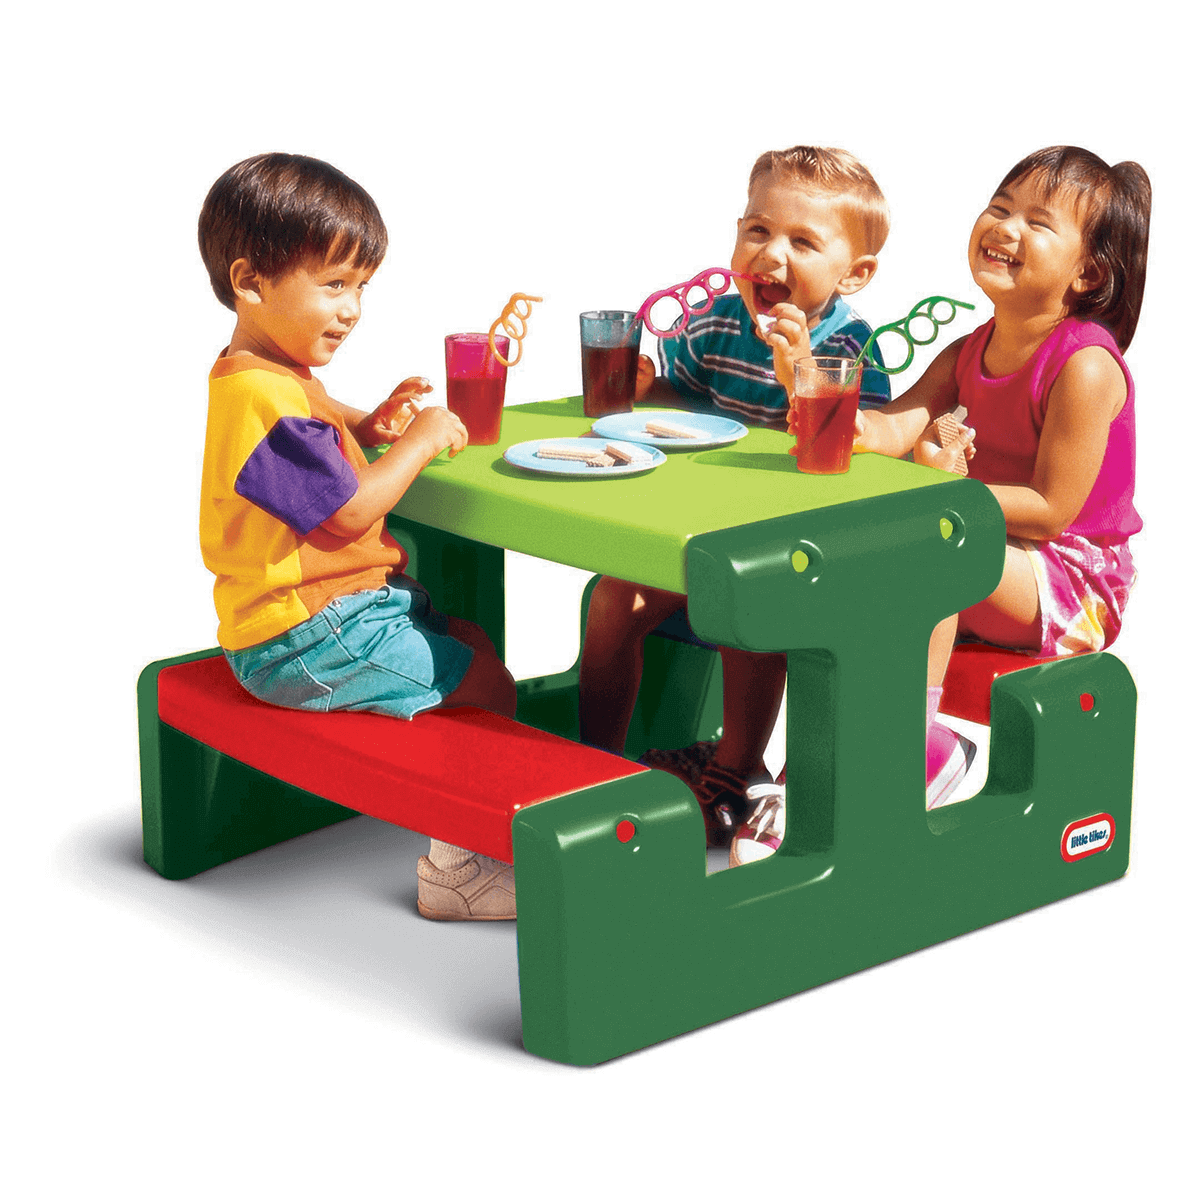  Little Tikes Junior Picnic Table - Green